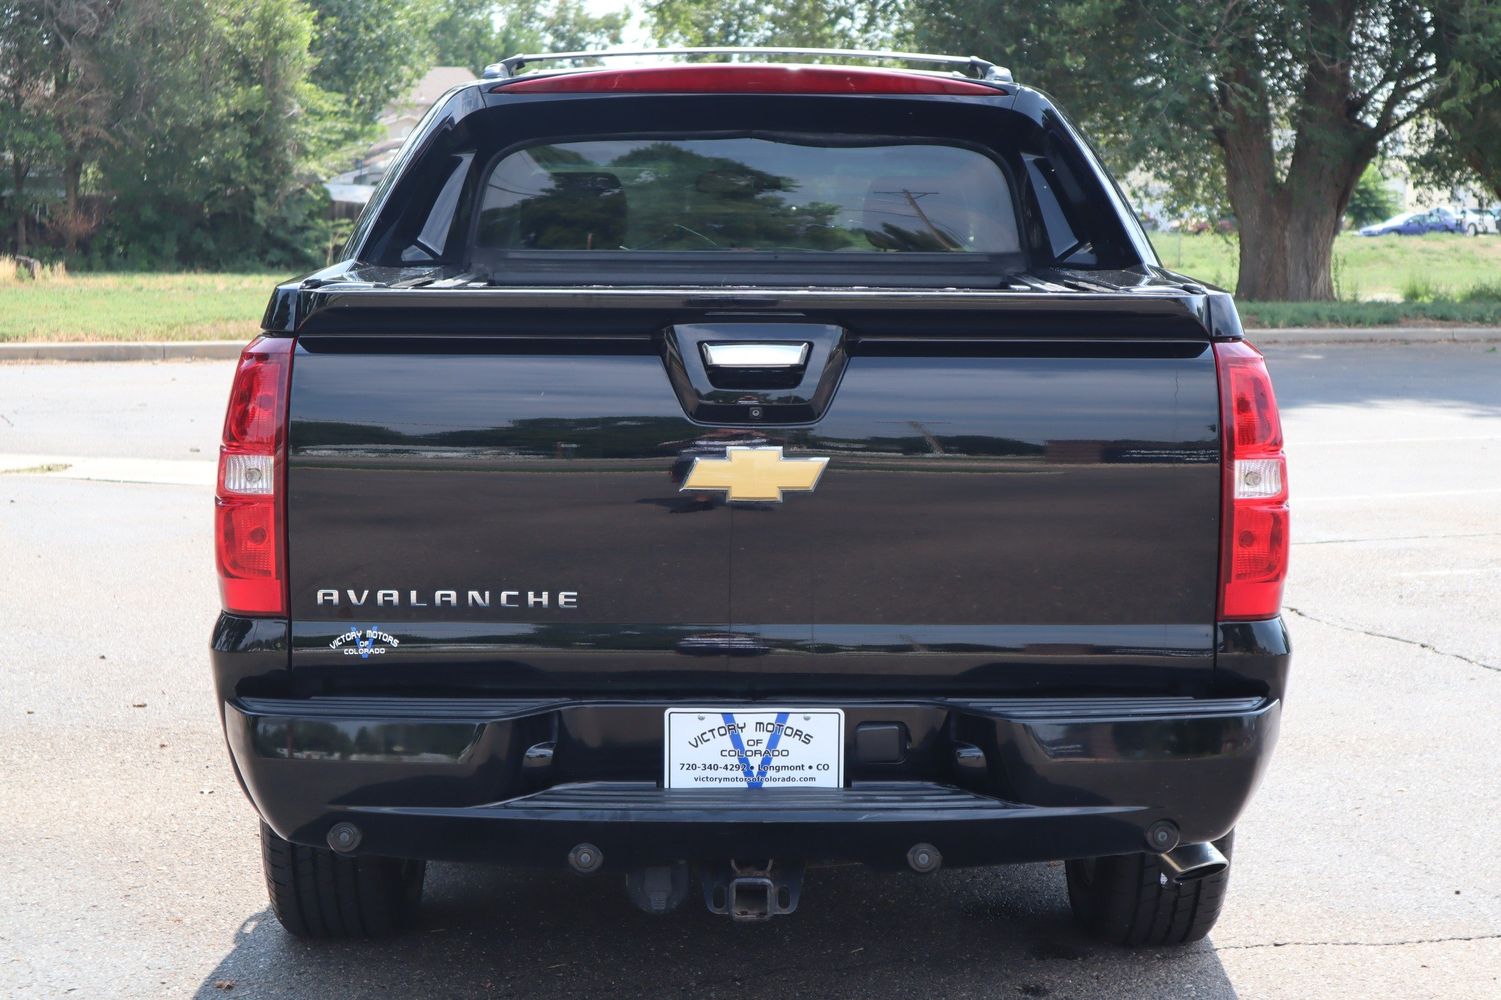 2013 Chevrolet Avalanche Ltz Black Diamond Victory Motors Of Colorado